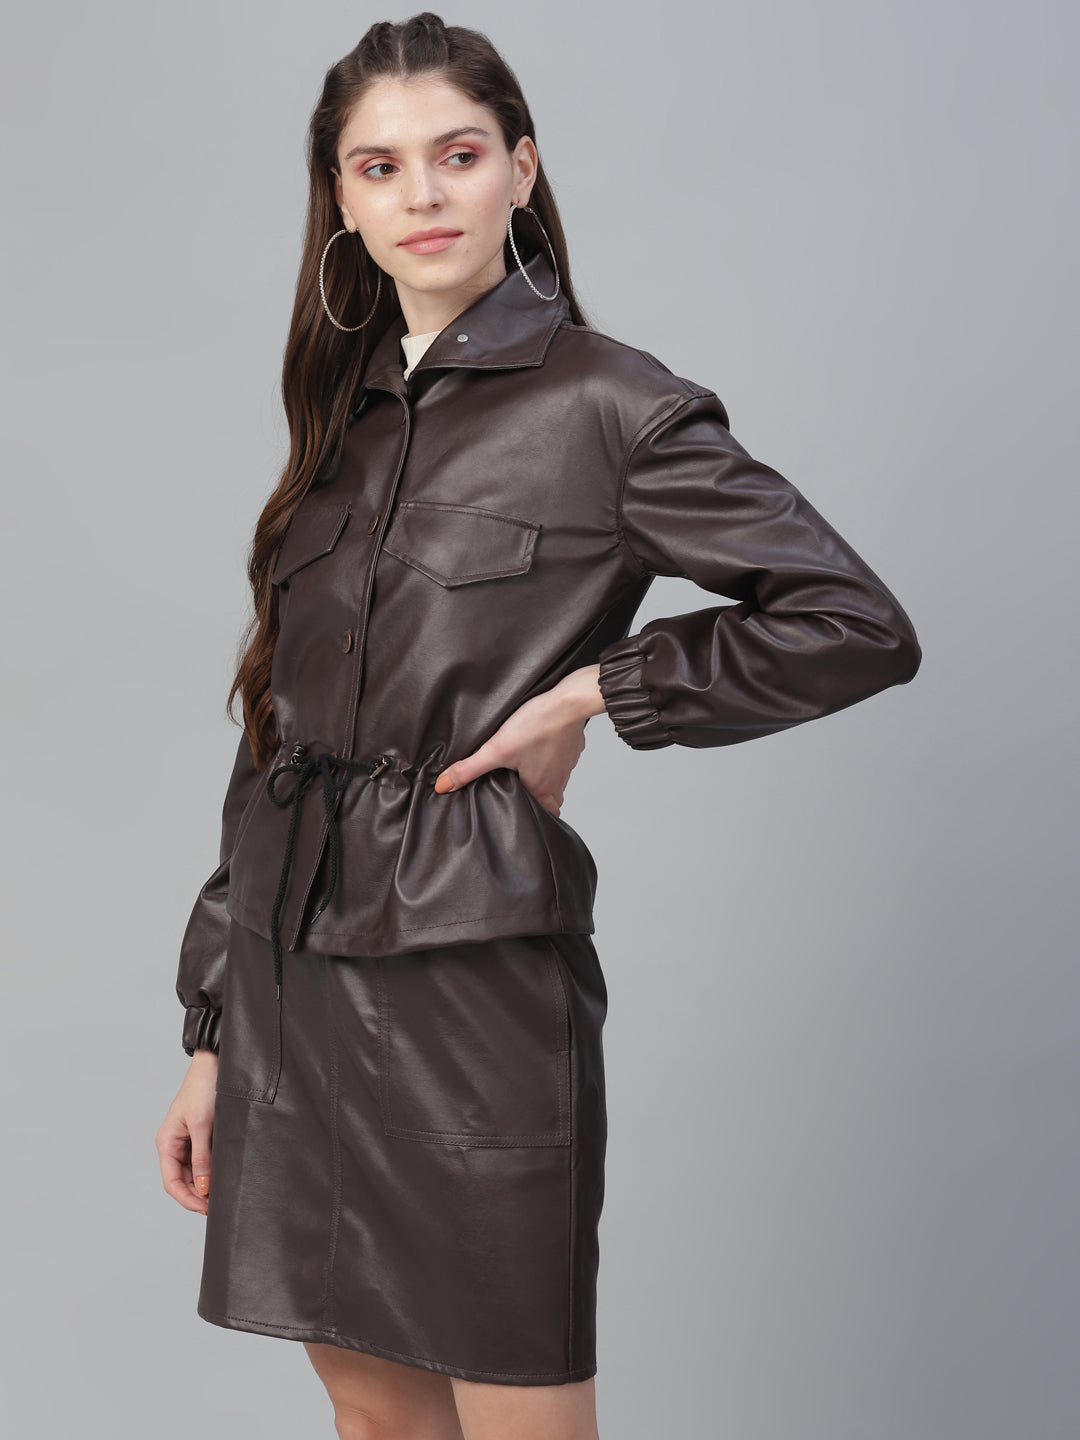 Athena Women Coffee Brown Solid Asymmetric Closure Tailored Leather Jacket - Athena Lifestyle